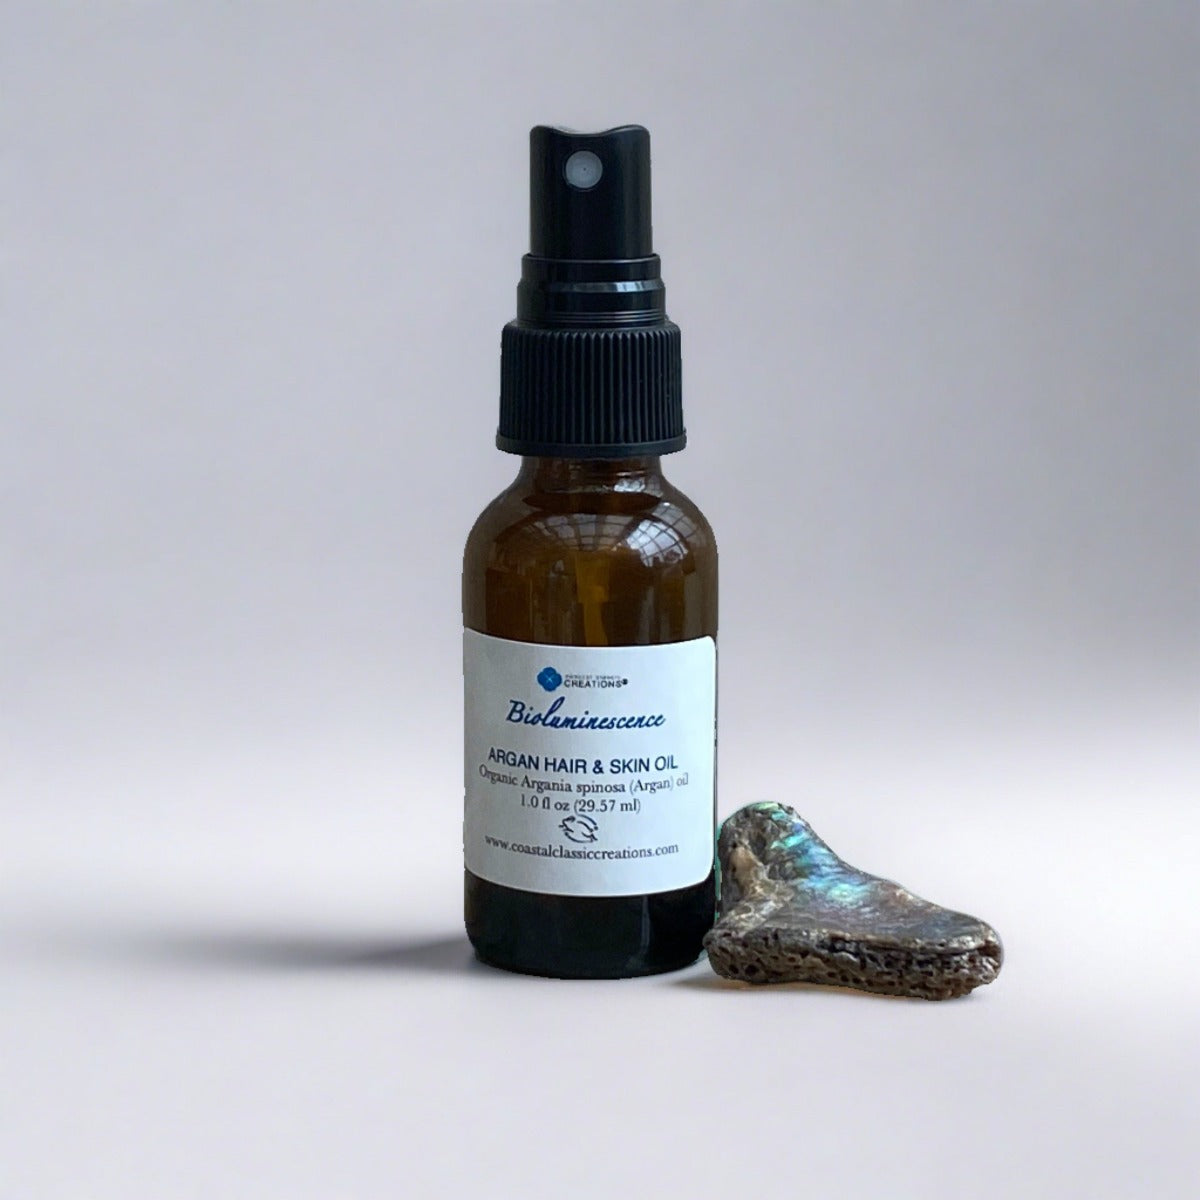 Bioluminescence Argan Hair & Skin Oil bottle with a spray top, alongside a small abalone shell